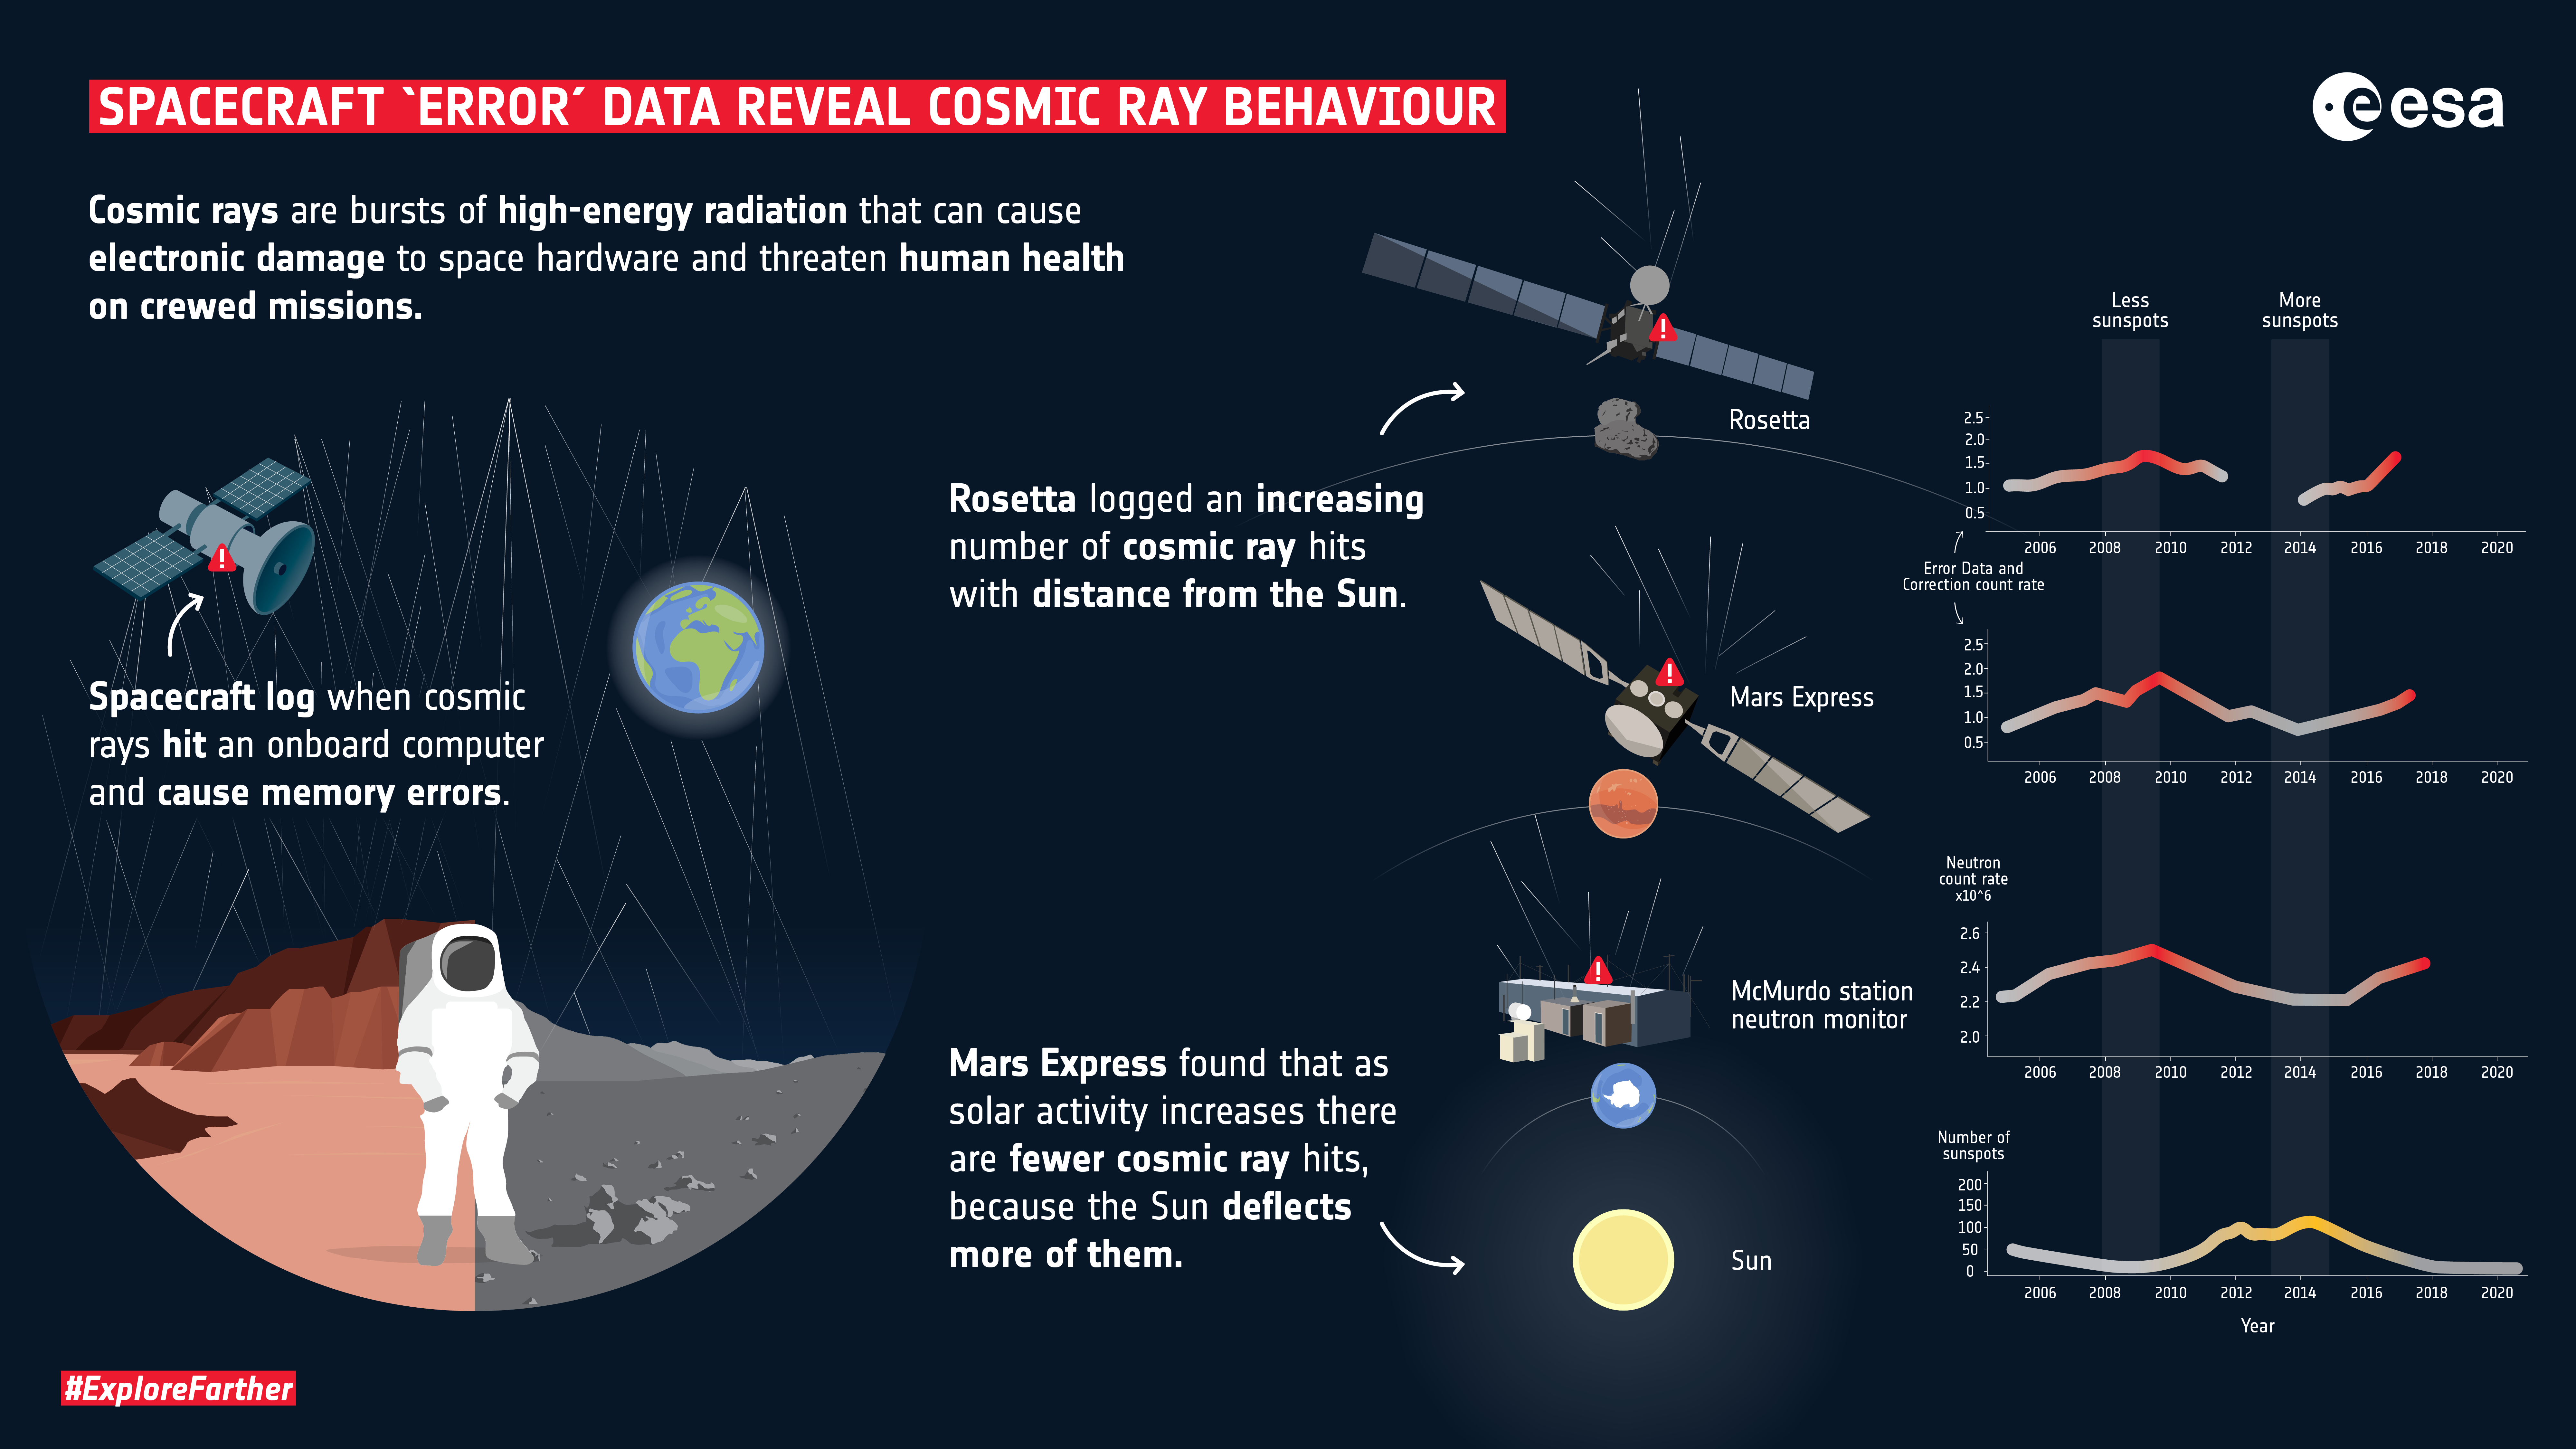 ESA - Spacecraft error data reveal cosmic ray behaviour